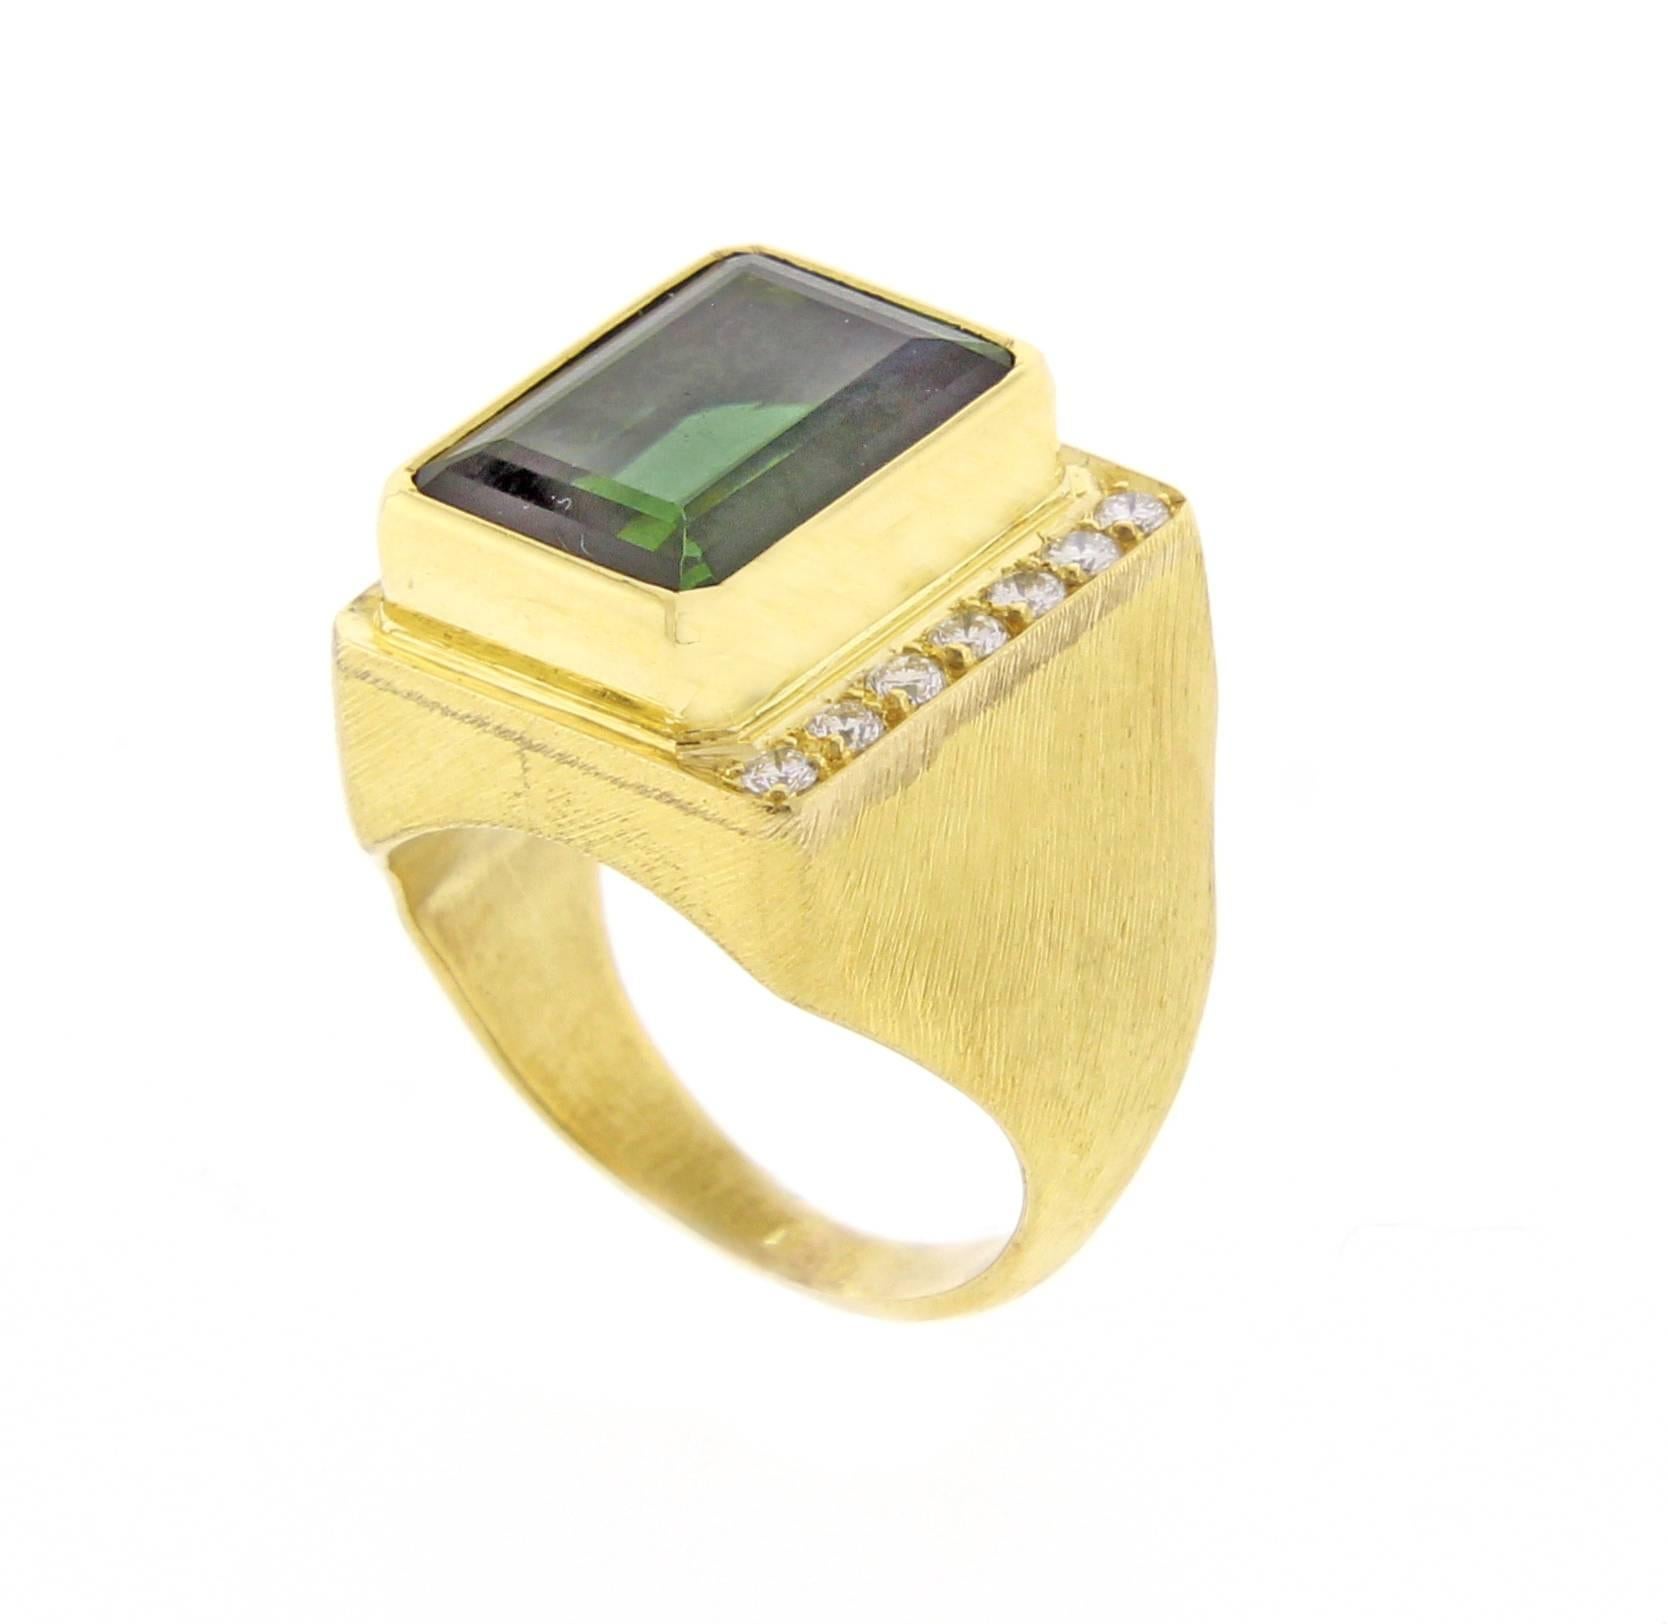 Modernist Burle Marx Tourmaline and Diamond Ring For Sale